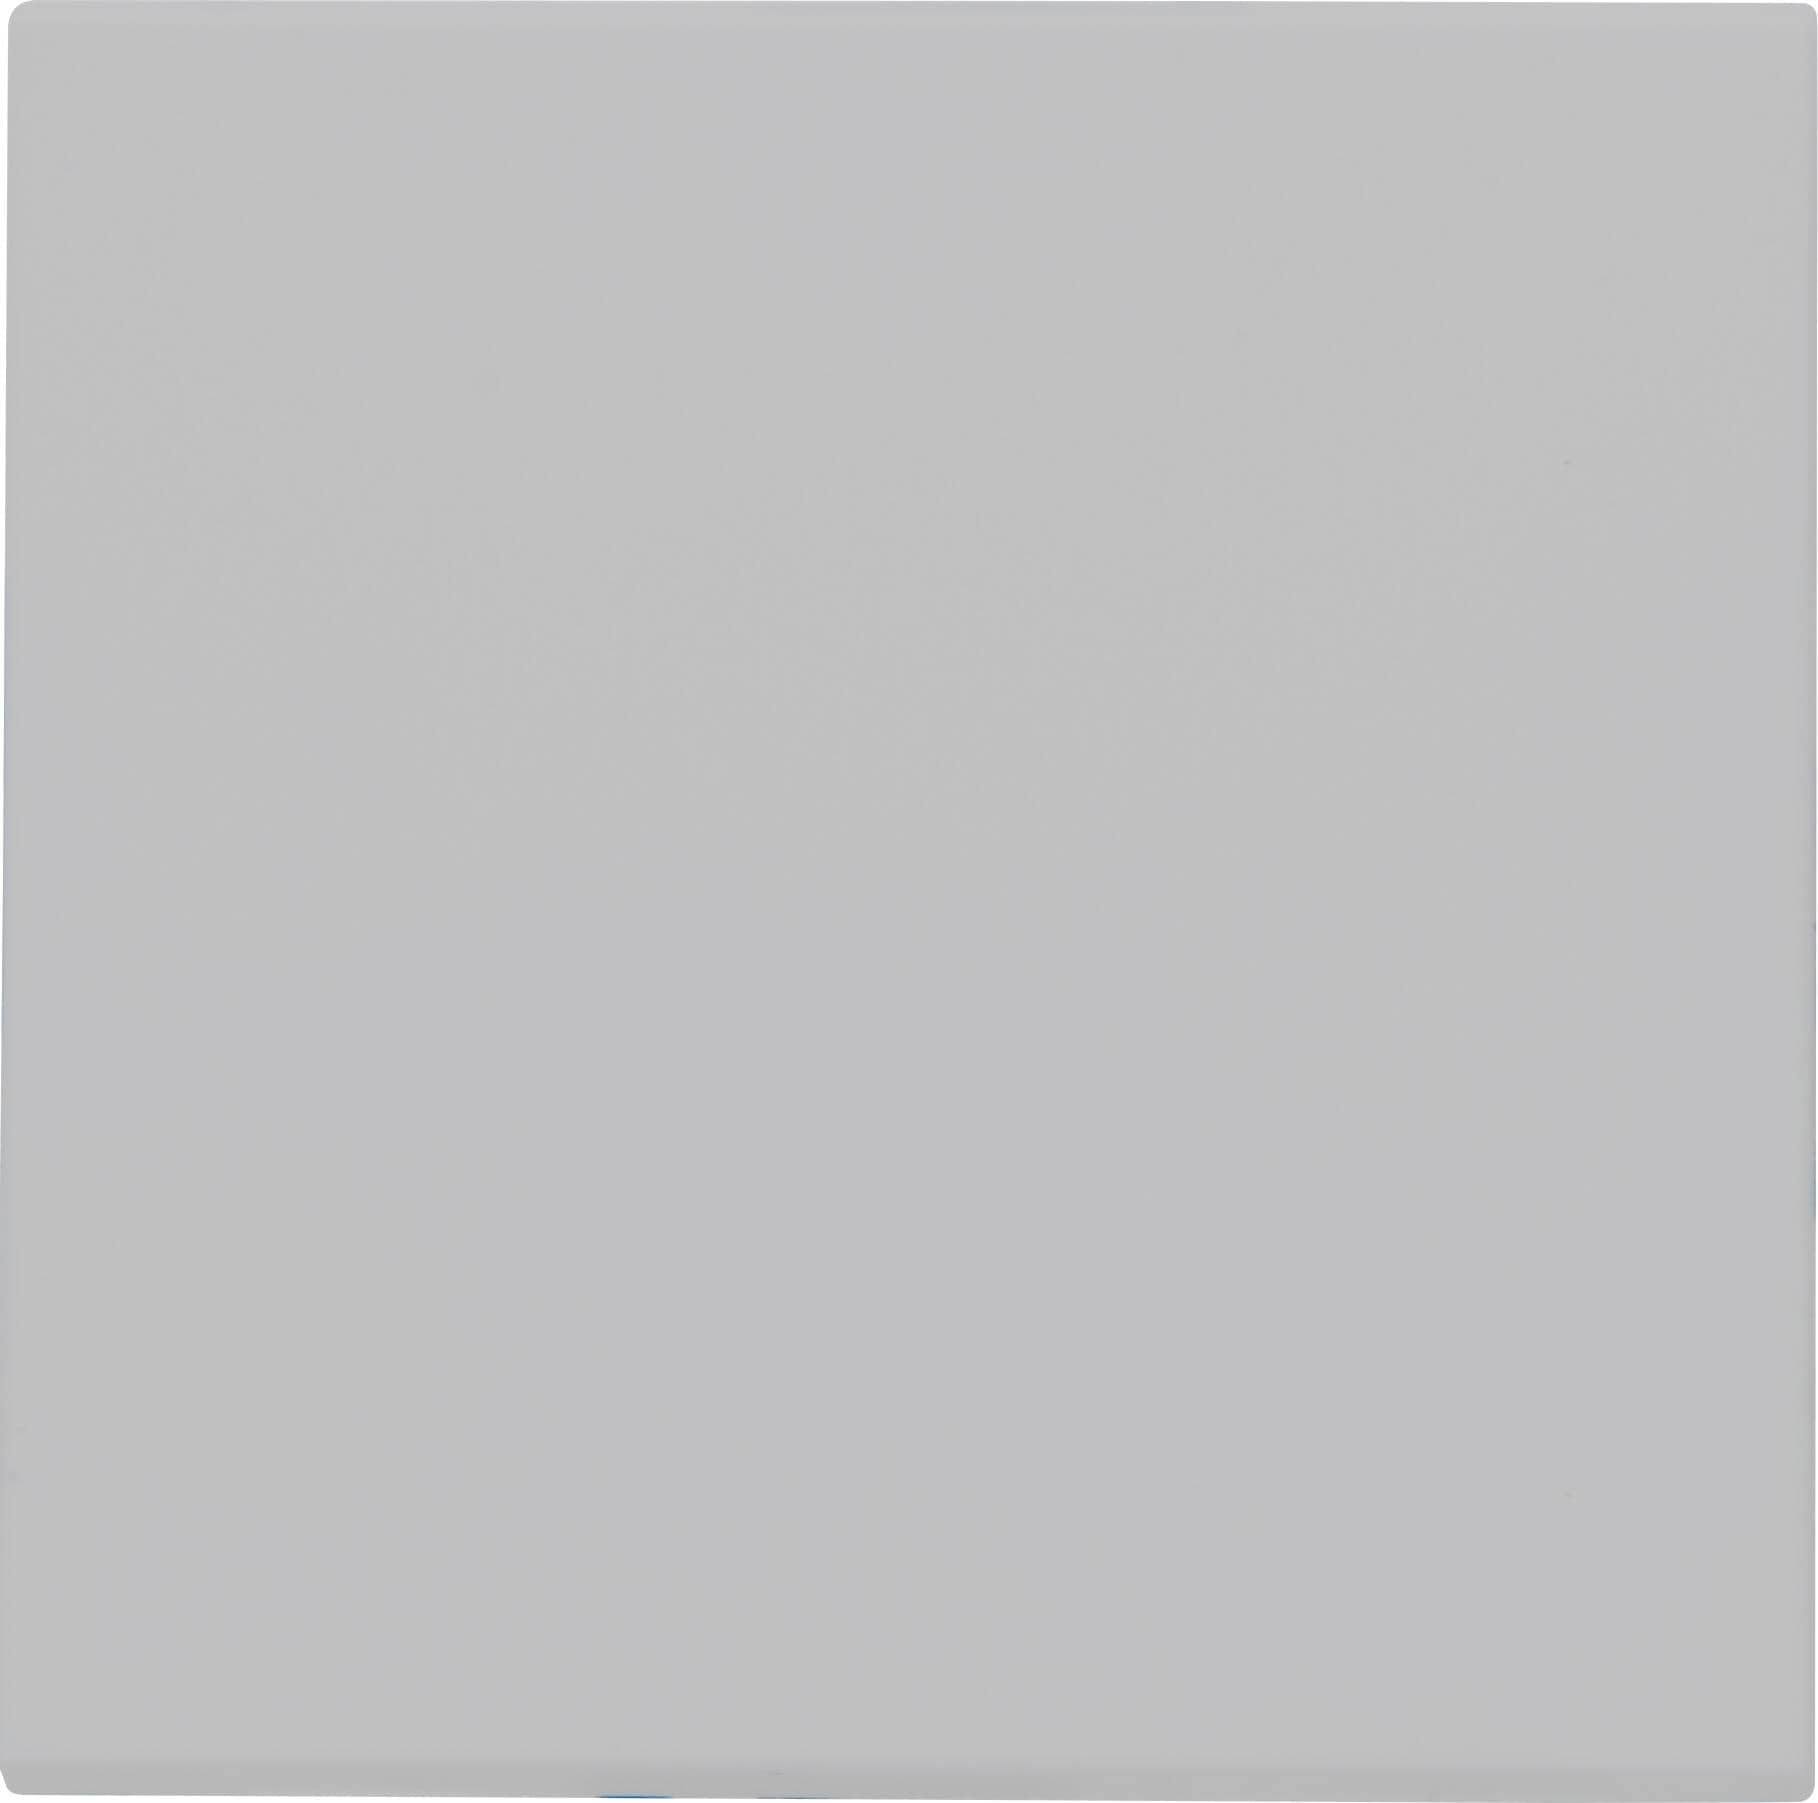 Kopp 490034000 HK07 - Flächenwippe ohne Linse, Farbe: grau matt